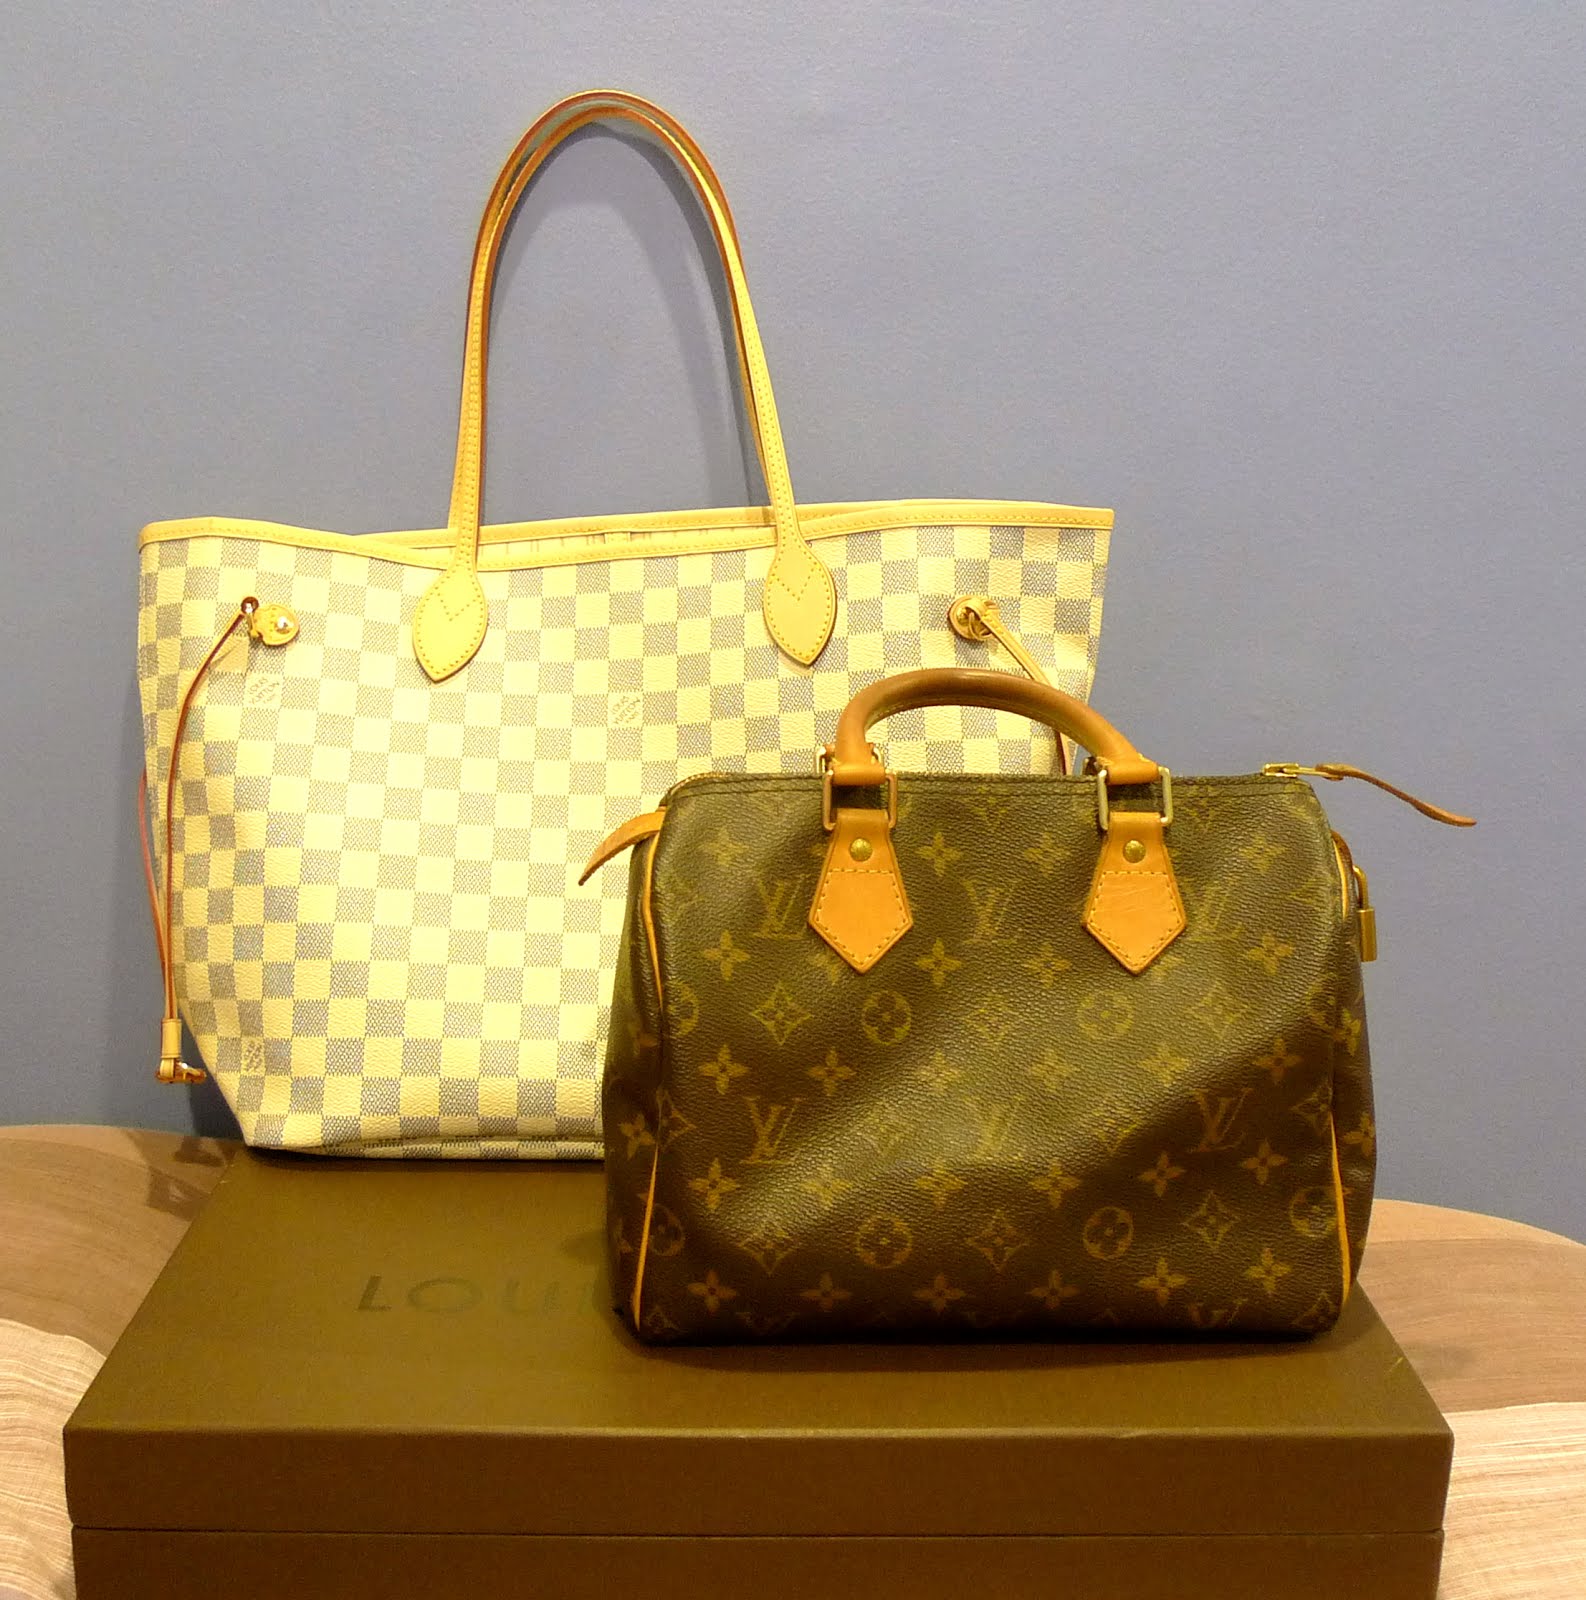 Louis Vuitton Neverfull PM damier azur - Good or Bag